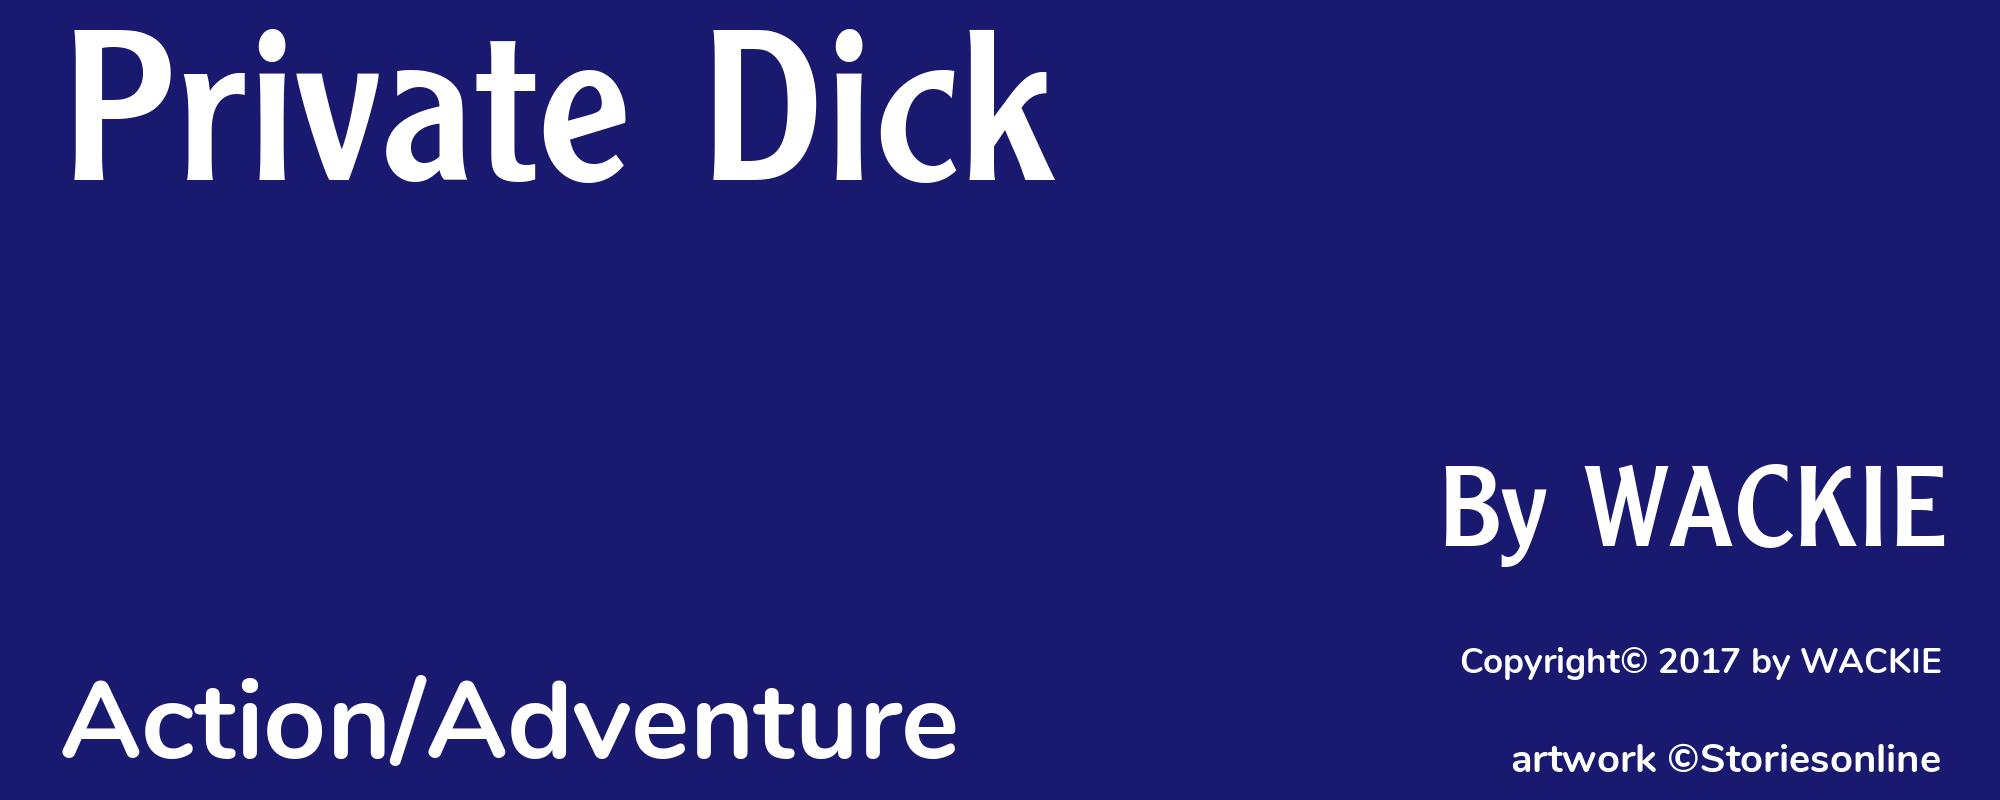 Private Dick - Cover